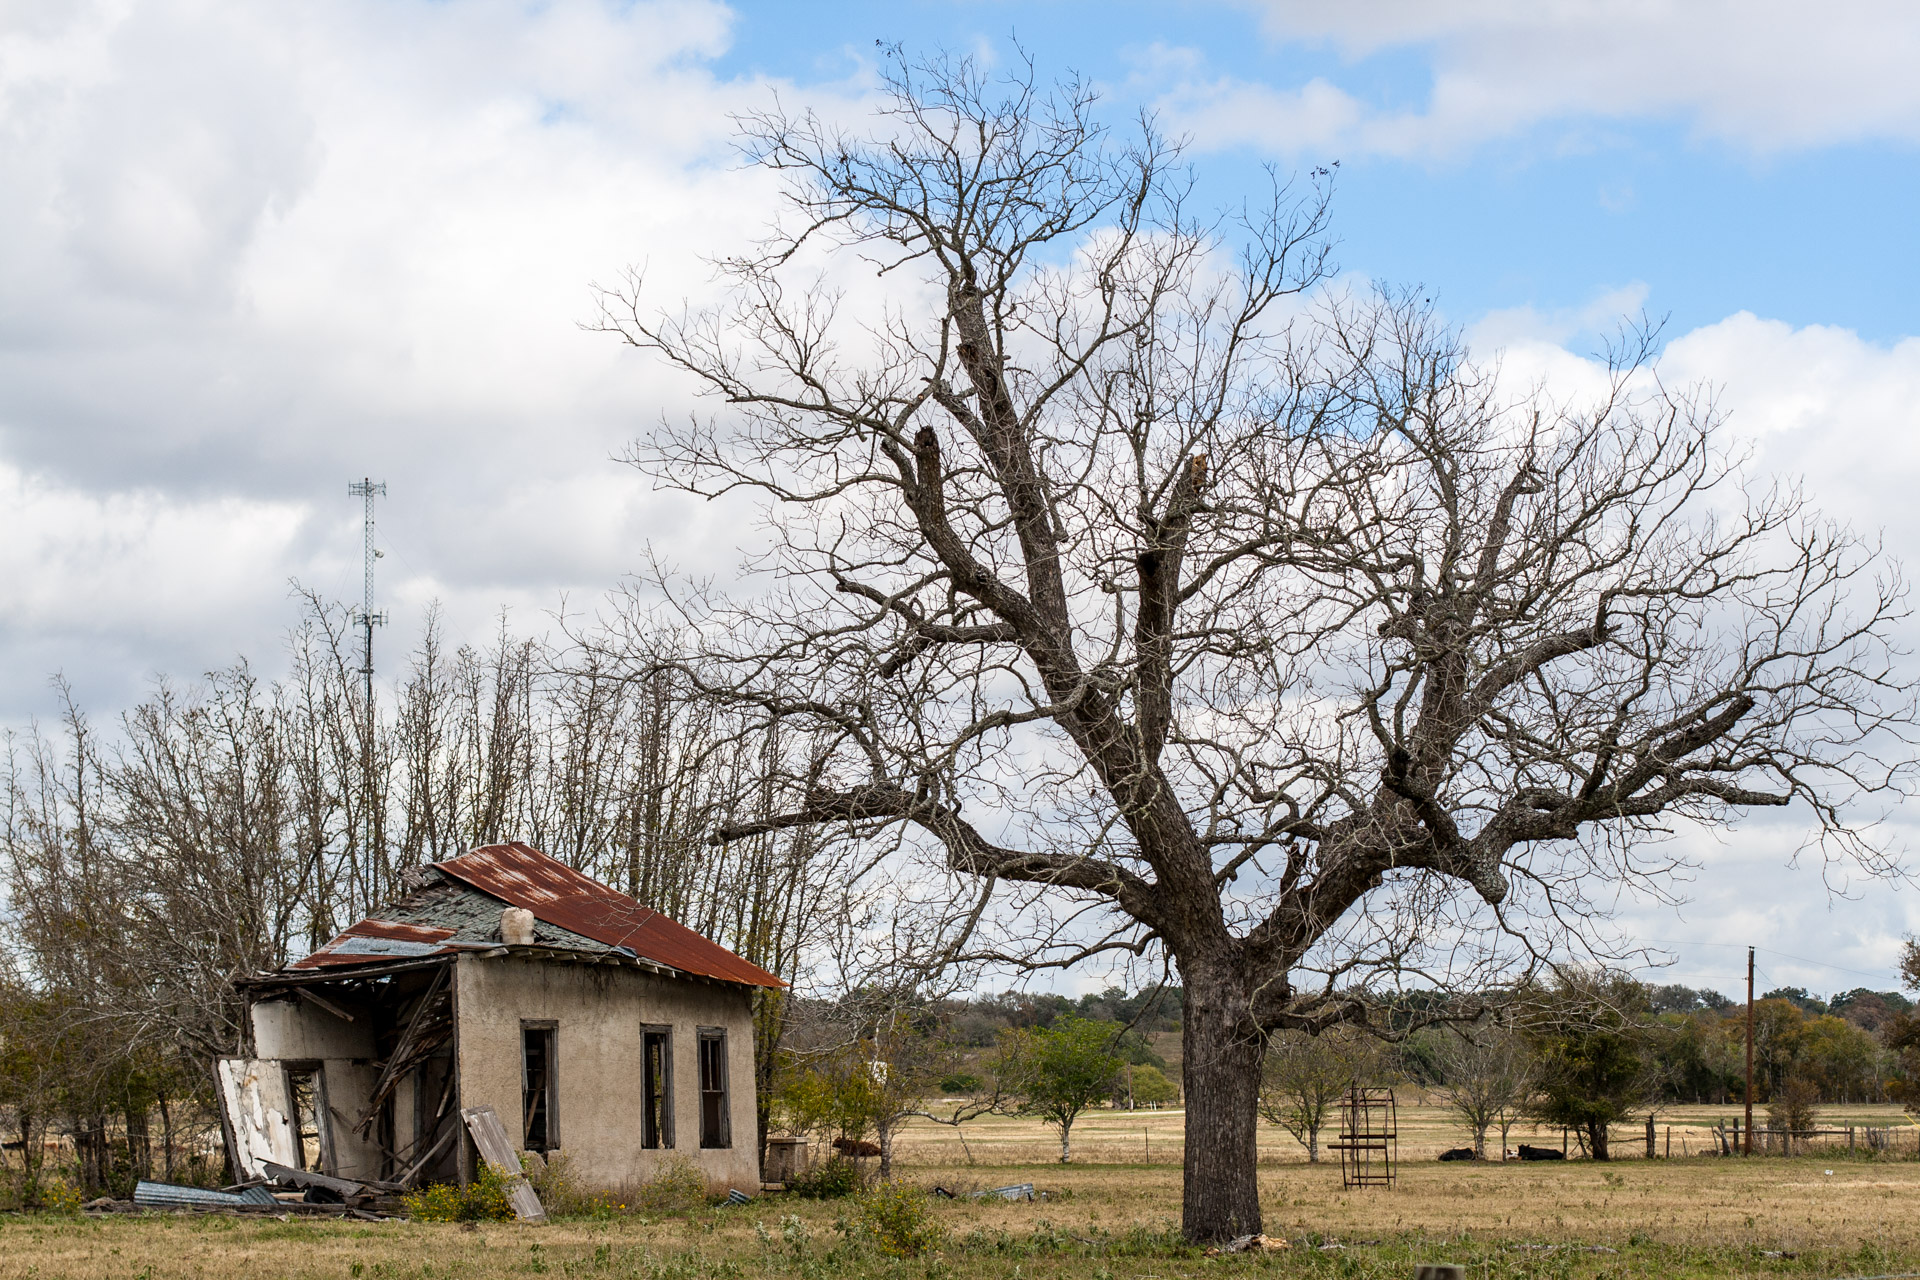 La Grange, Texas - An Impacted Roof Farmhouse (left far)